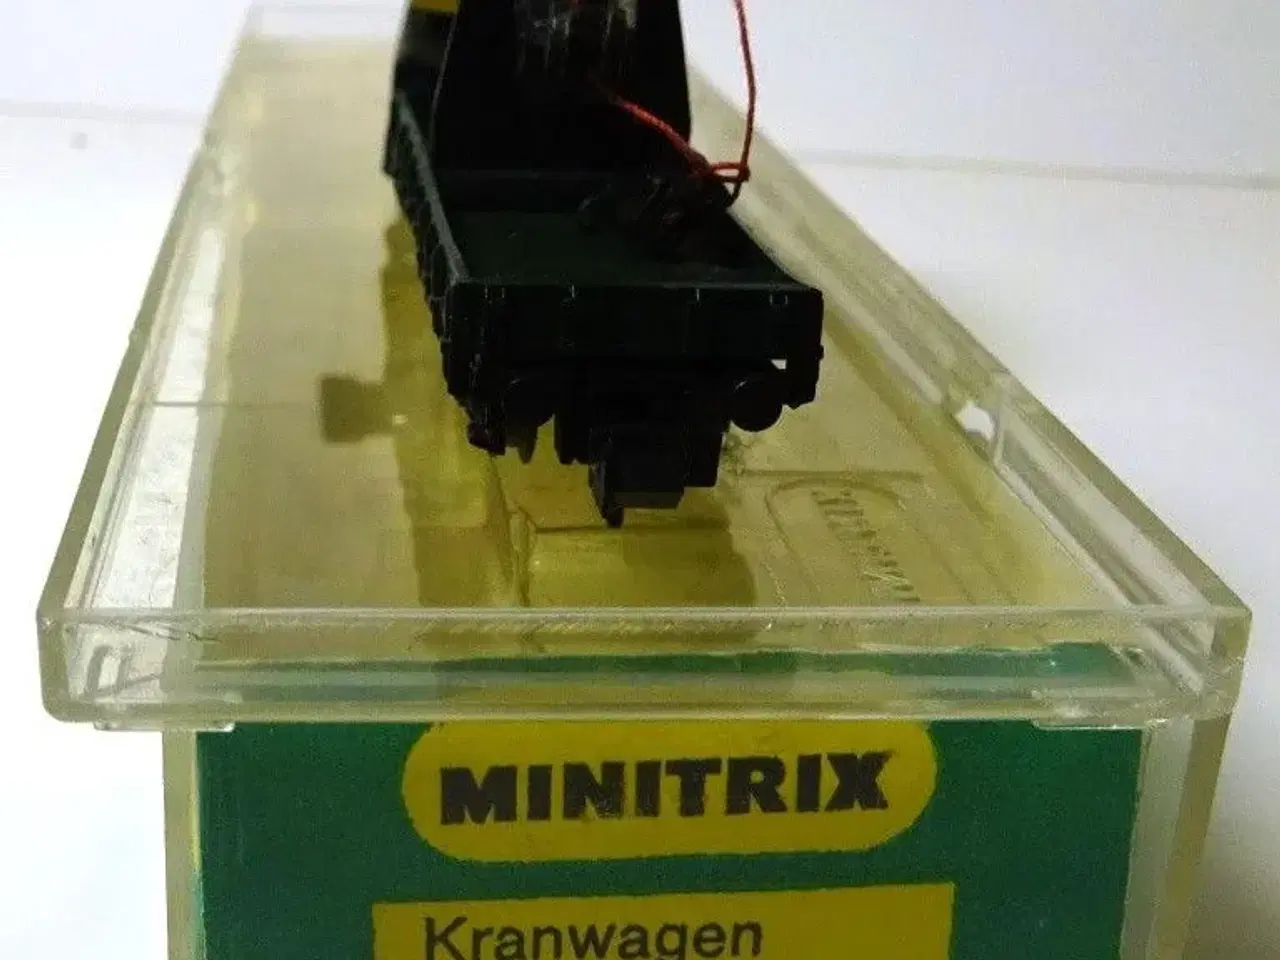 Billede 2 - Minitrix togvogne.